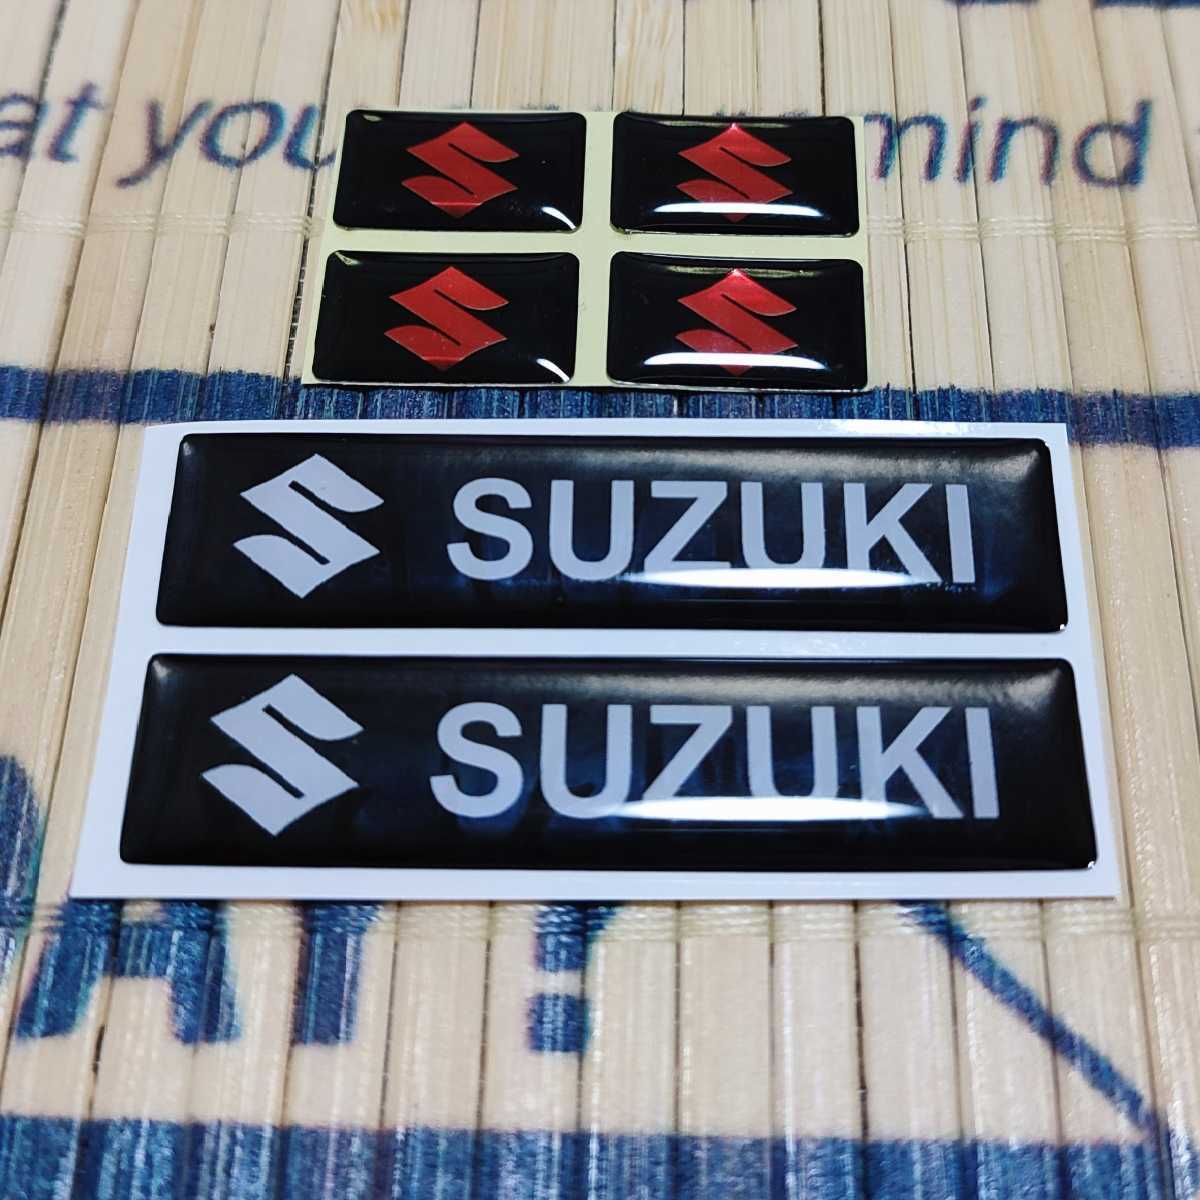  Suzuki 3D Mini sticker B 6 pieces set # Jimny Cross Be Wagon R Swift Hustler Spacia Alto Lapin / chocolate / Works Solio 